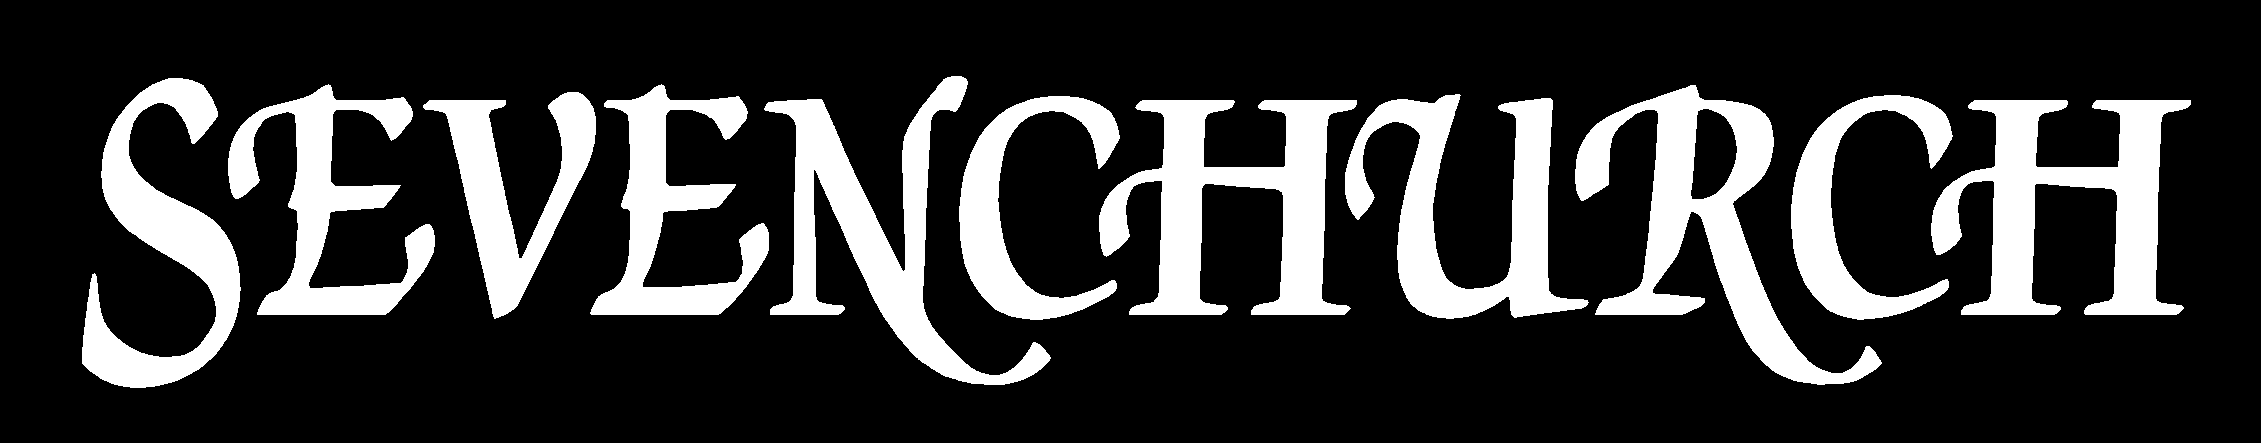 Sevenchurch Logo 3